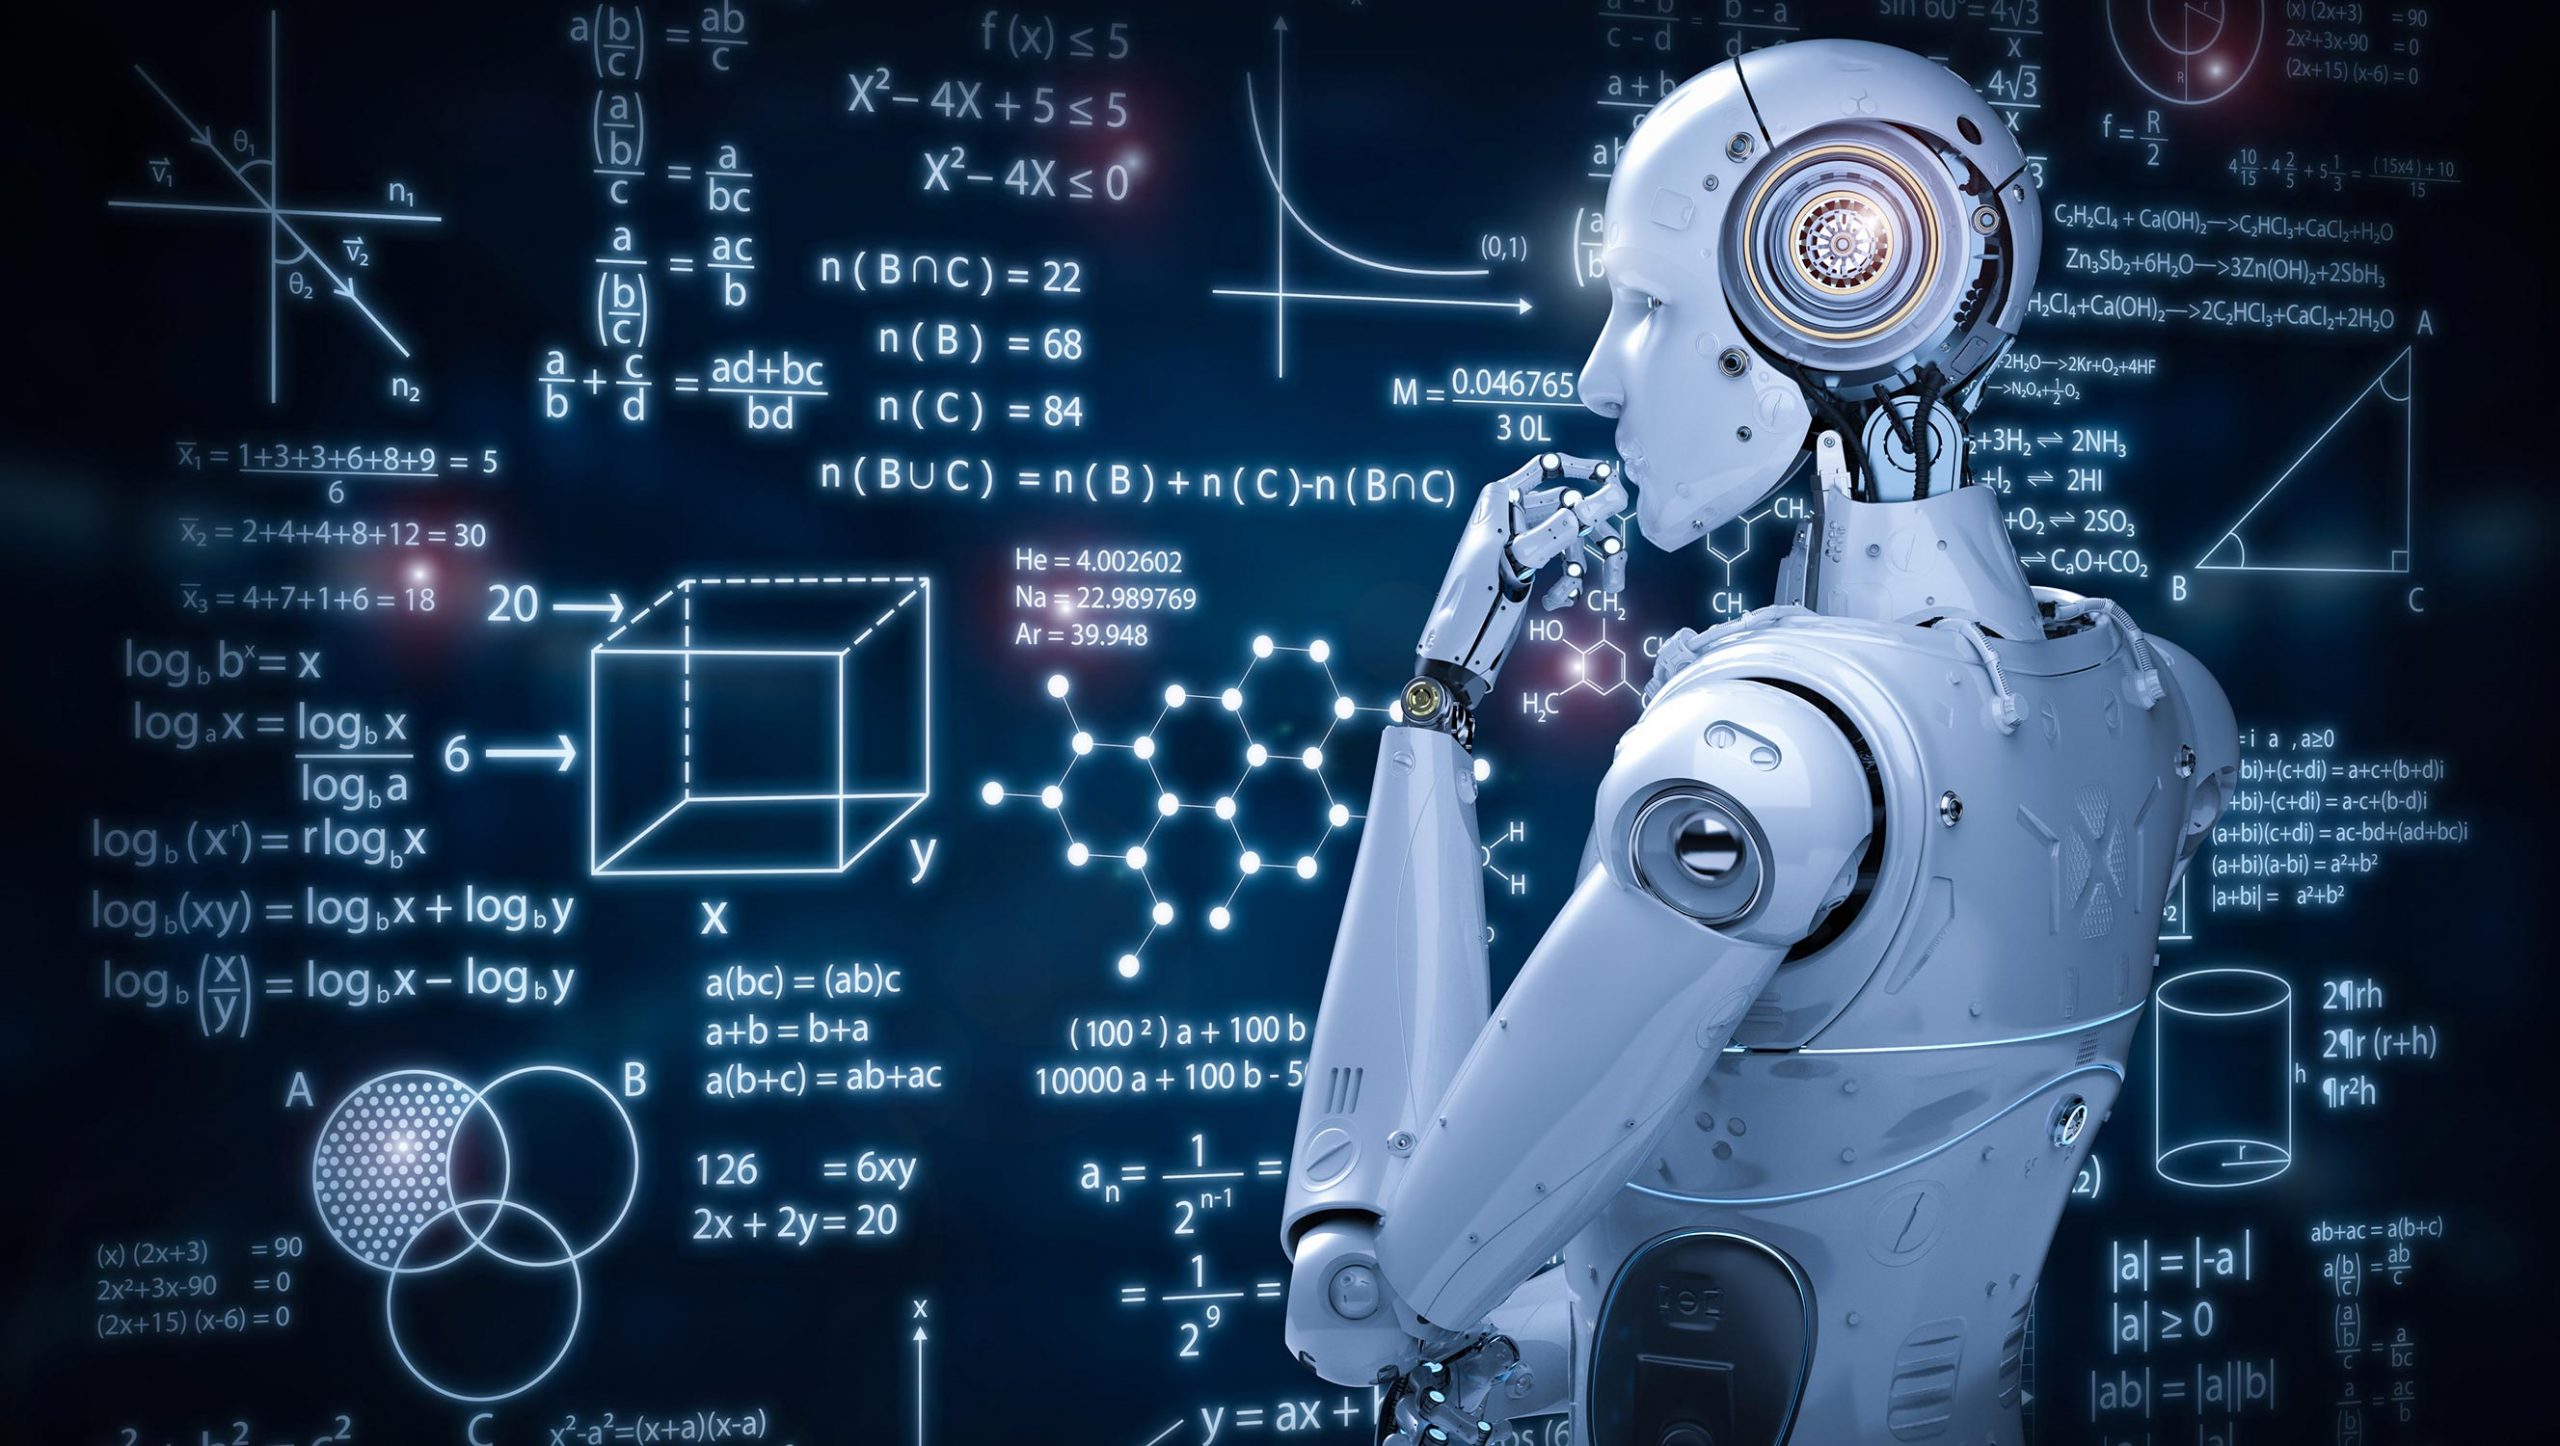 Robomorphic Computing: Designing Customized “Brains” for Robots